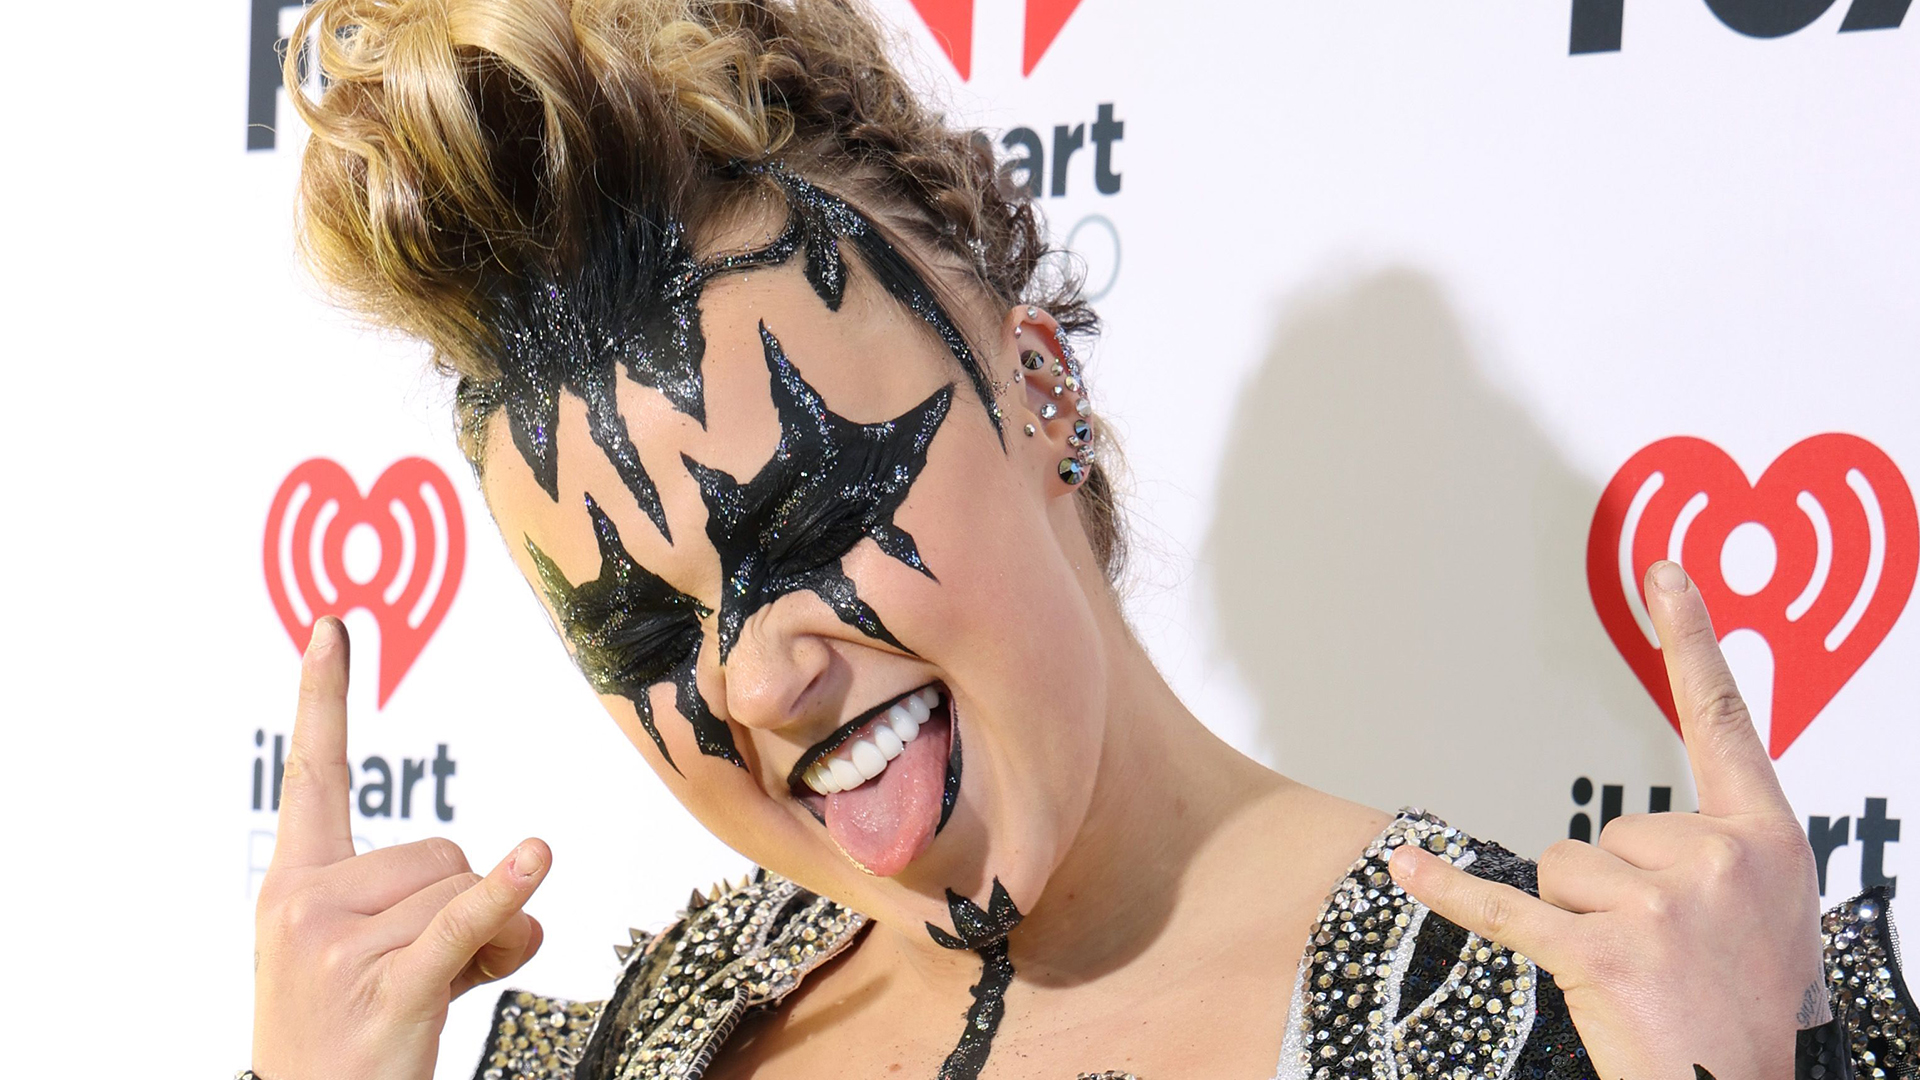 JoJo Siwa debuts goth makeup in sheer catsuit at the iHeartRadio Awards